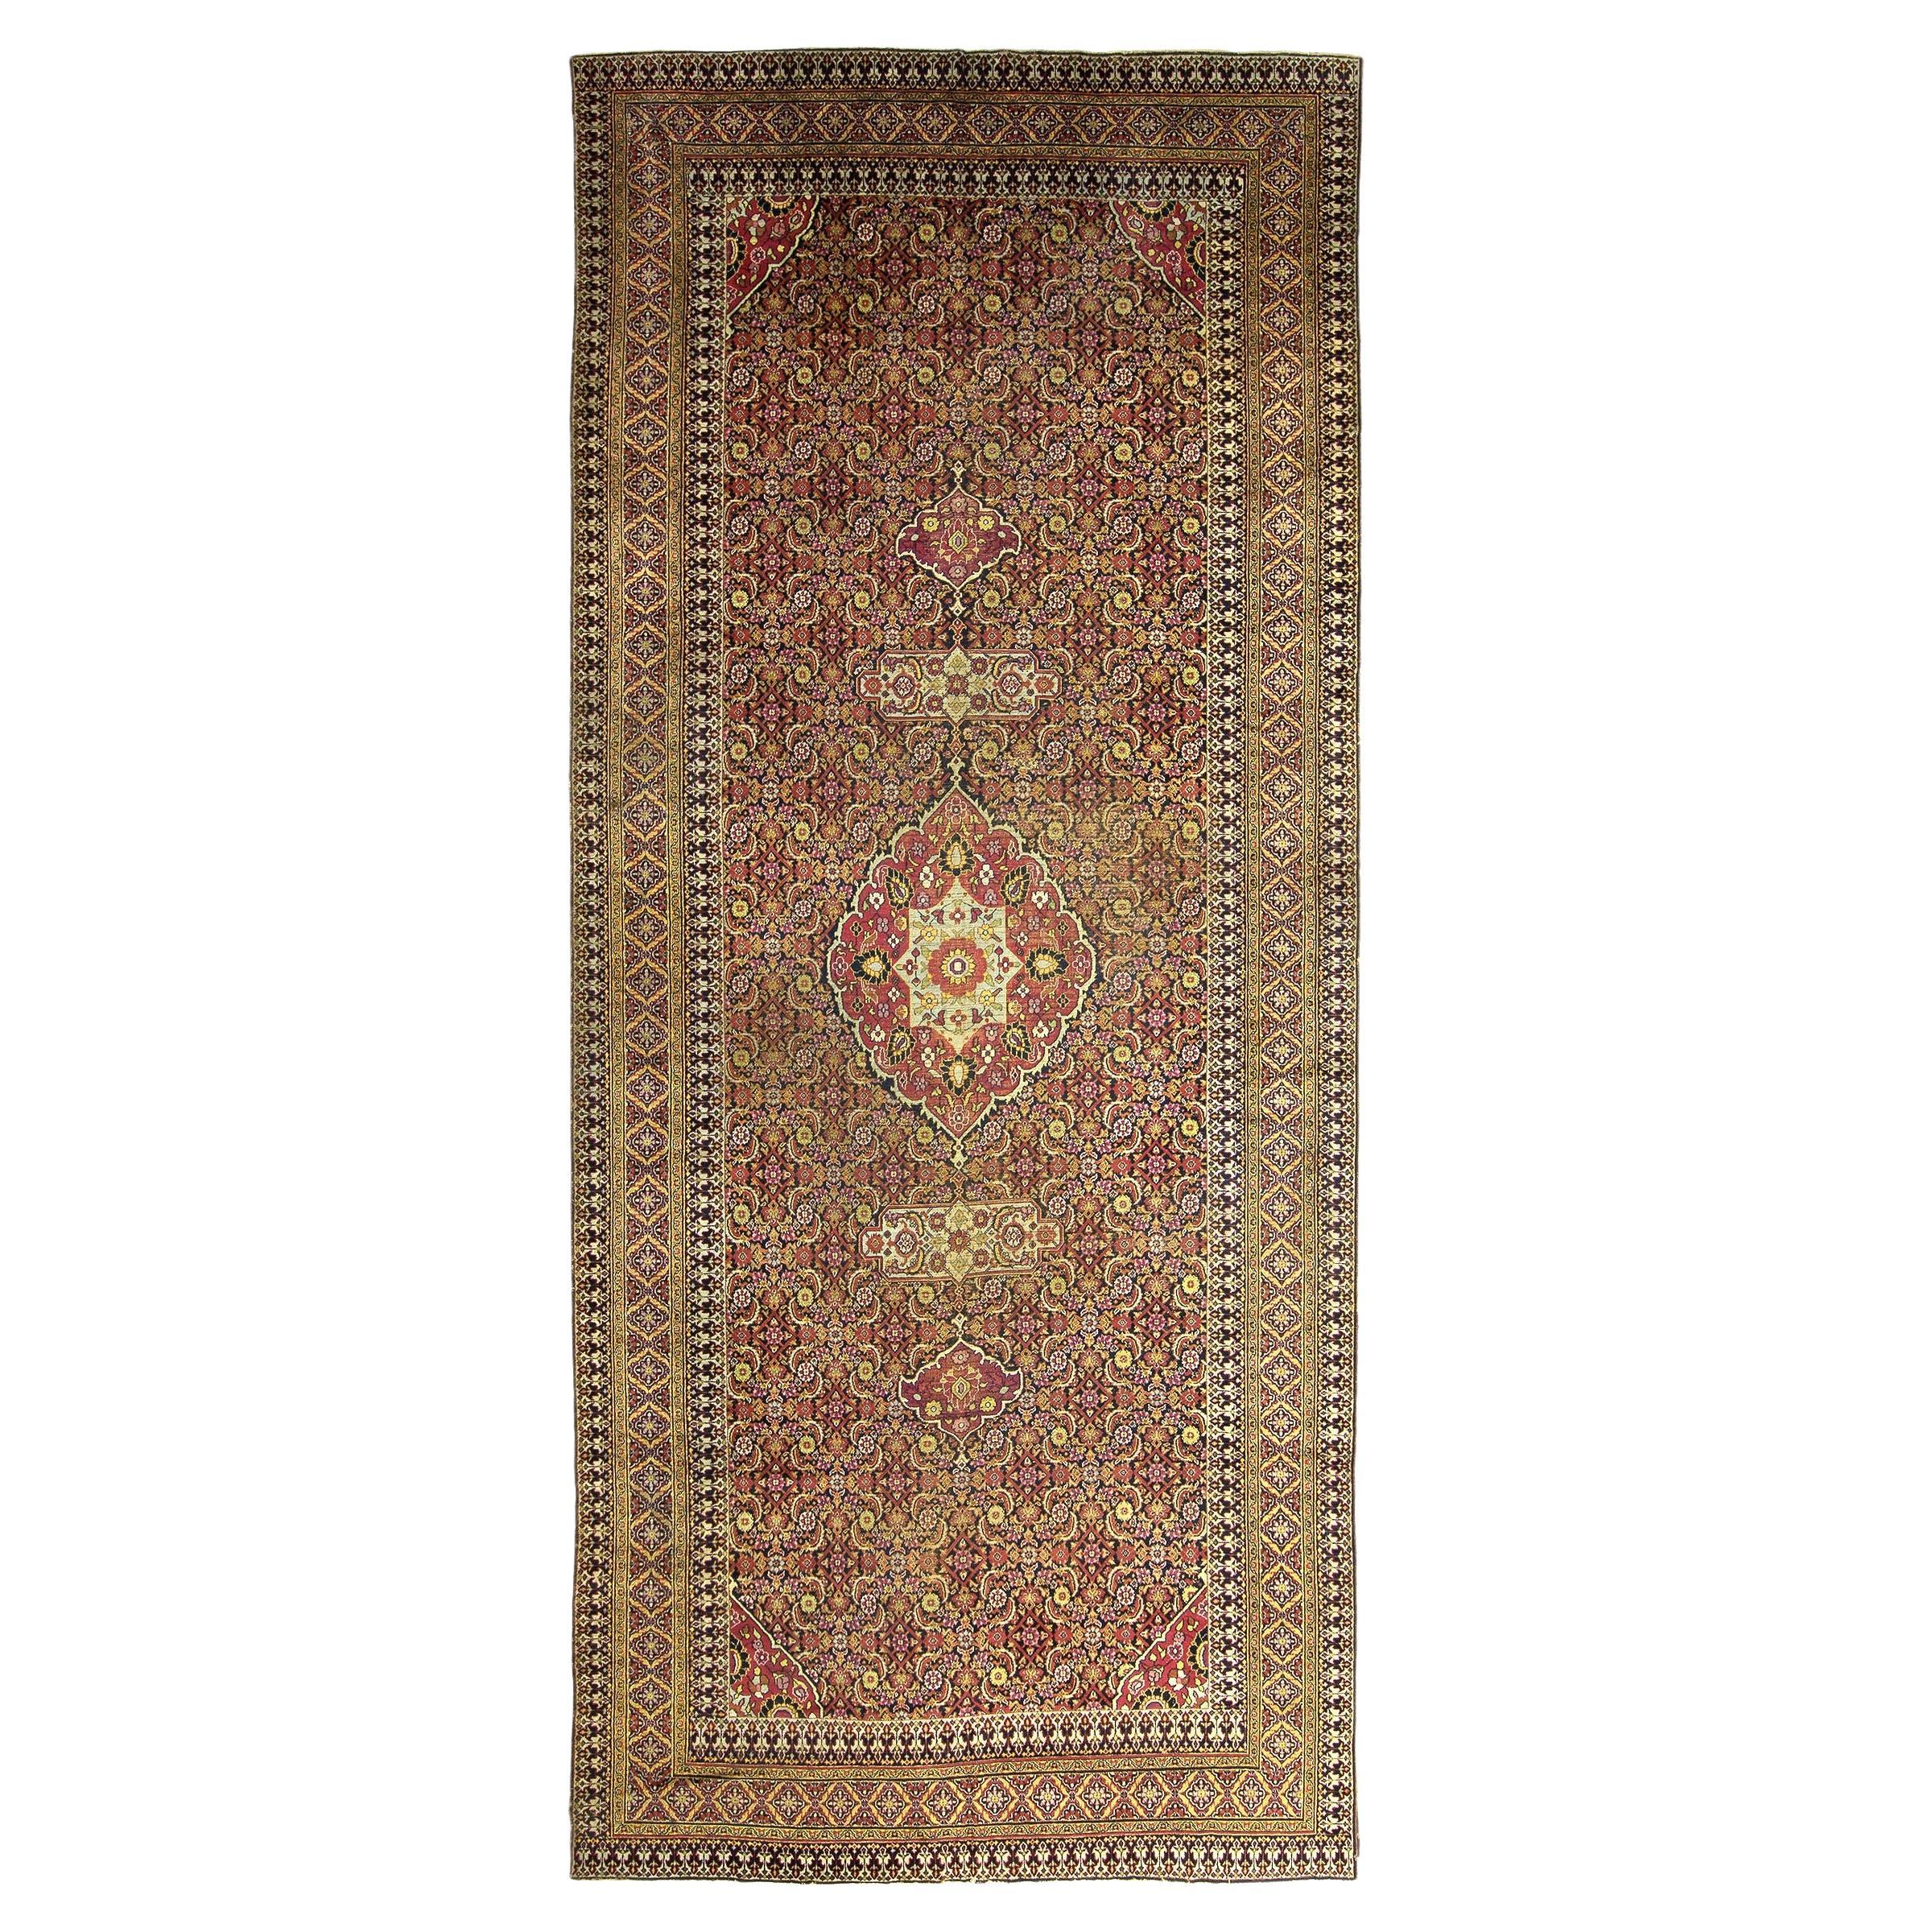 Antique Khorassan Gallery Carpet For Sale